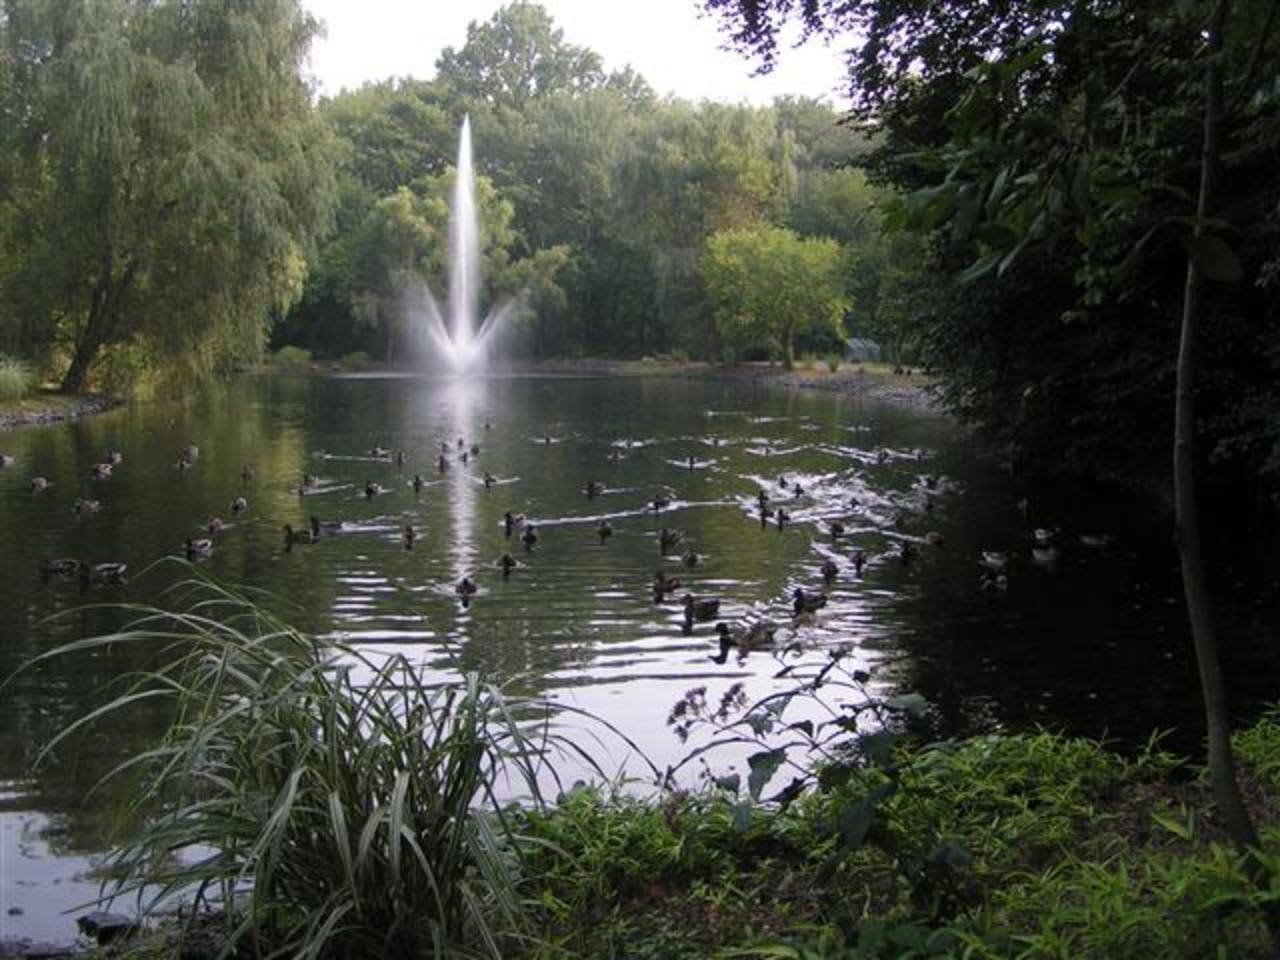 a view along the walk at Thielke Arboretum in Glen Rock